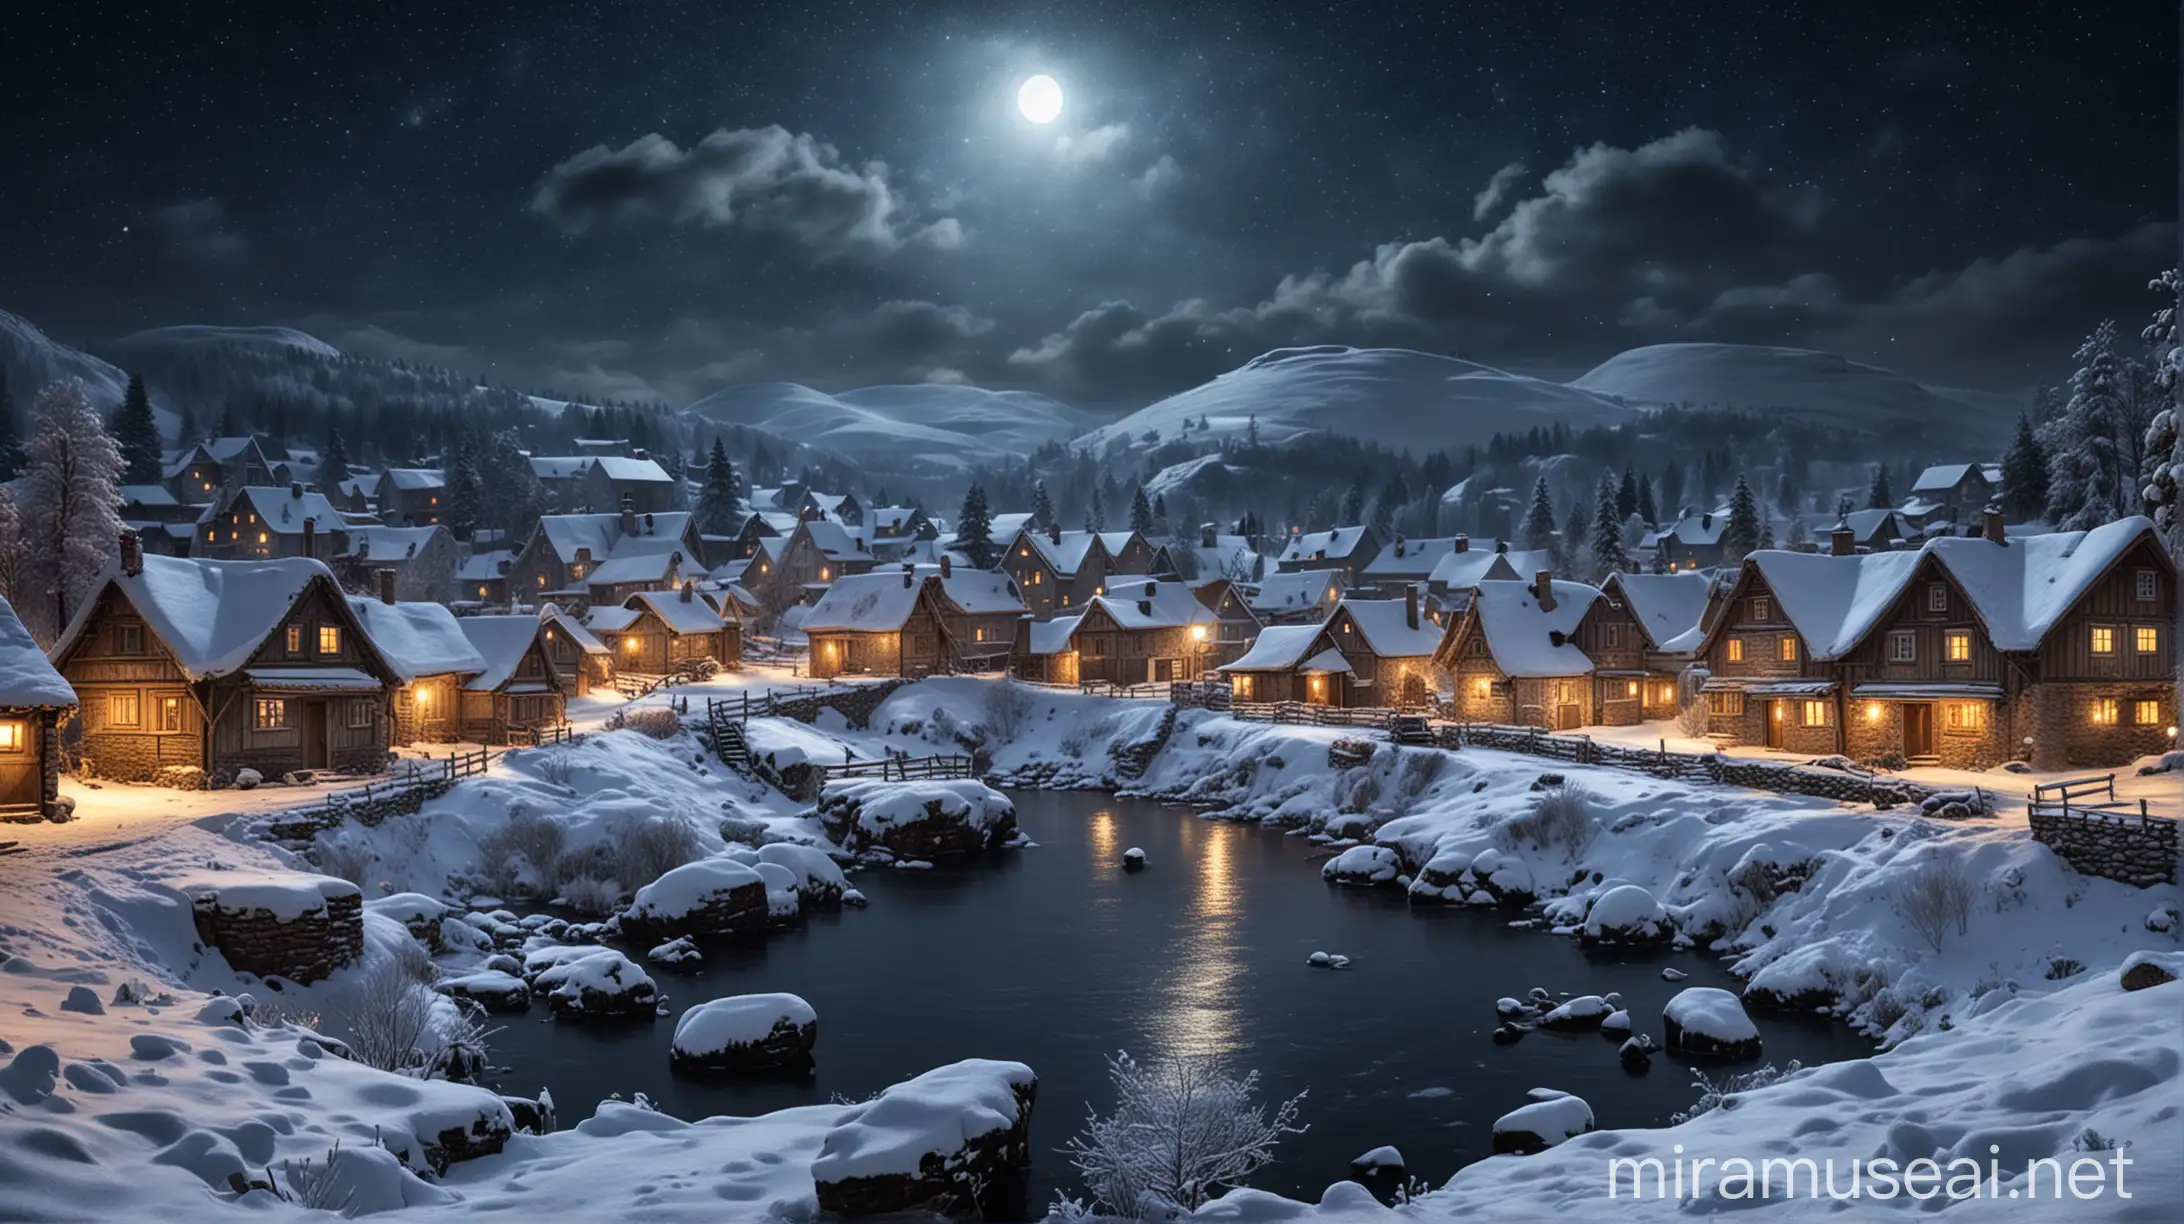 night snowy village landscape